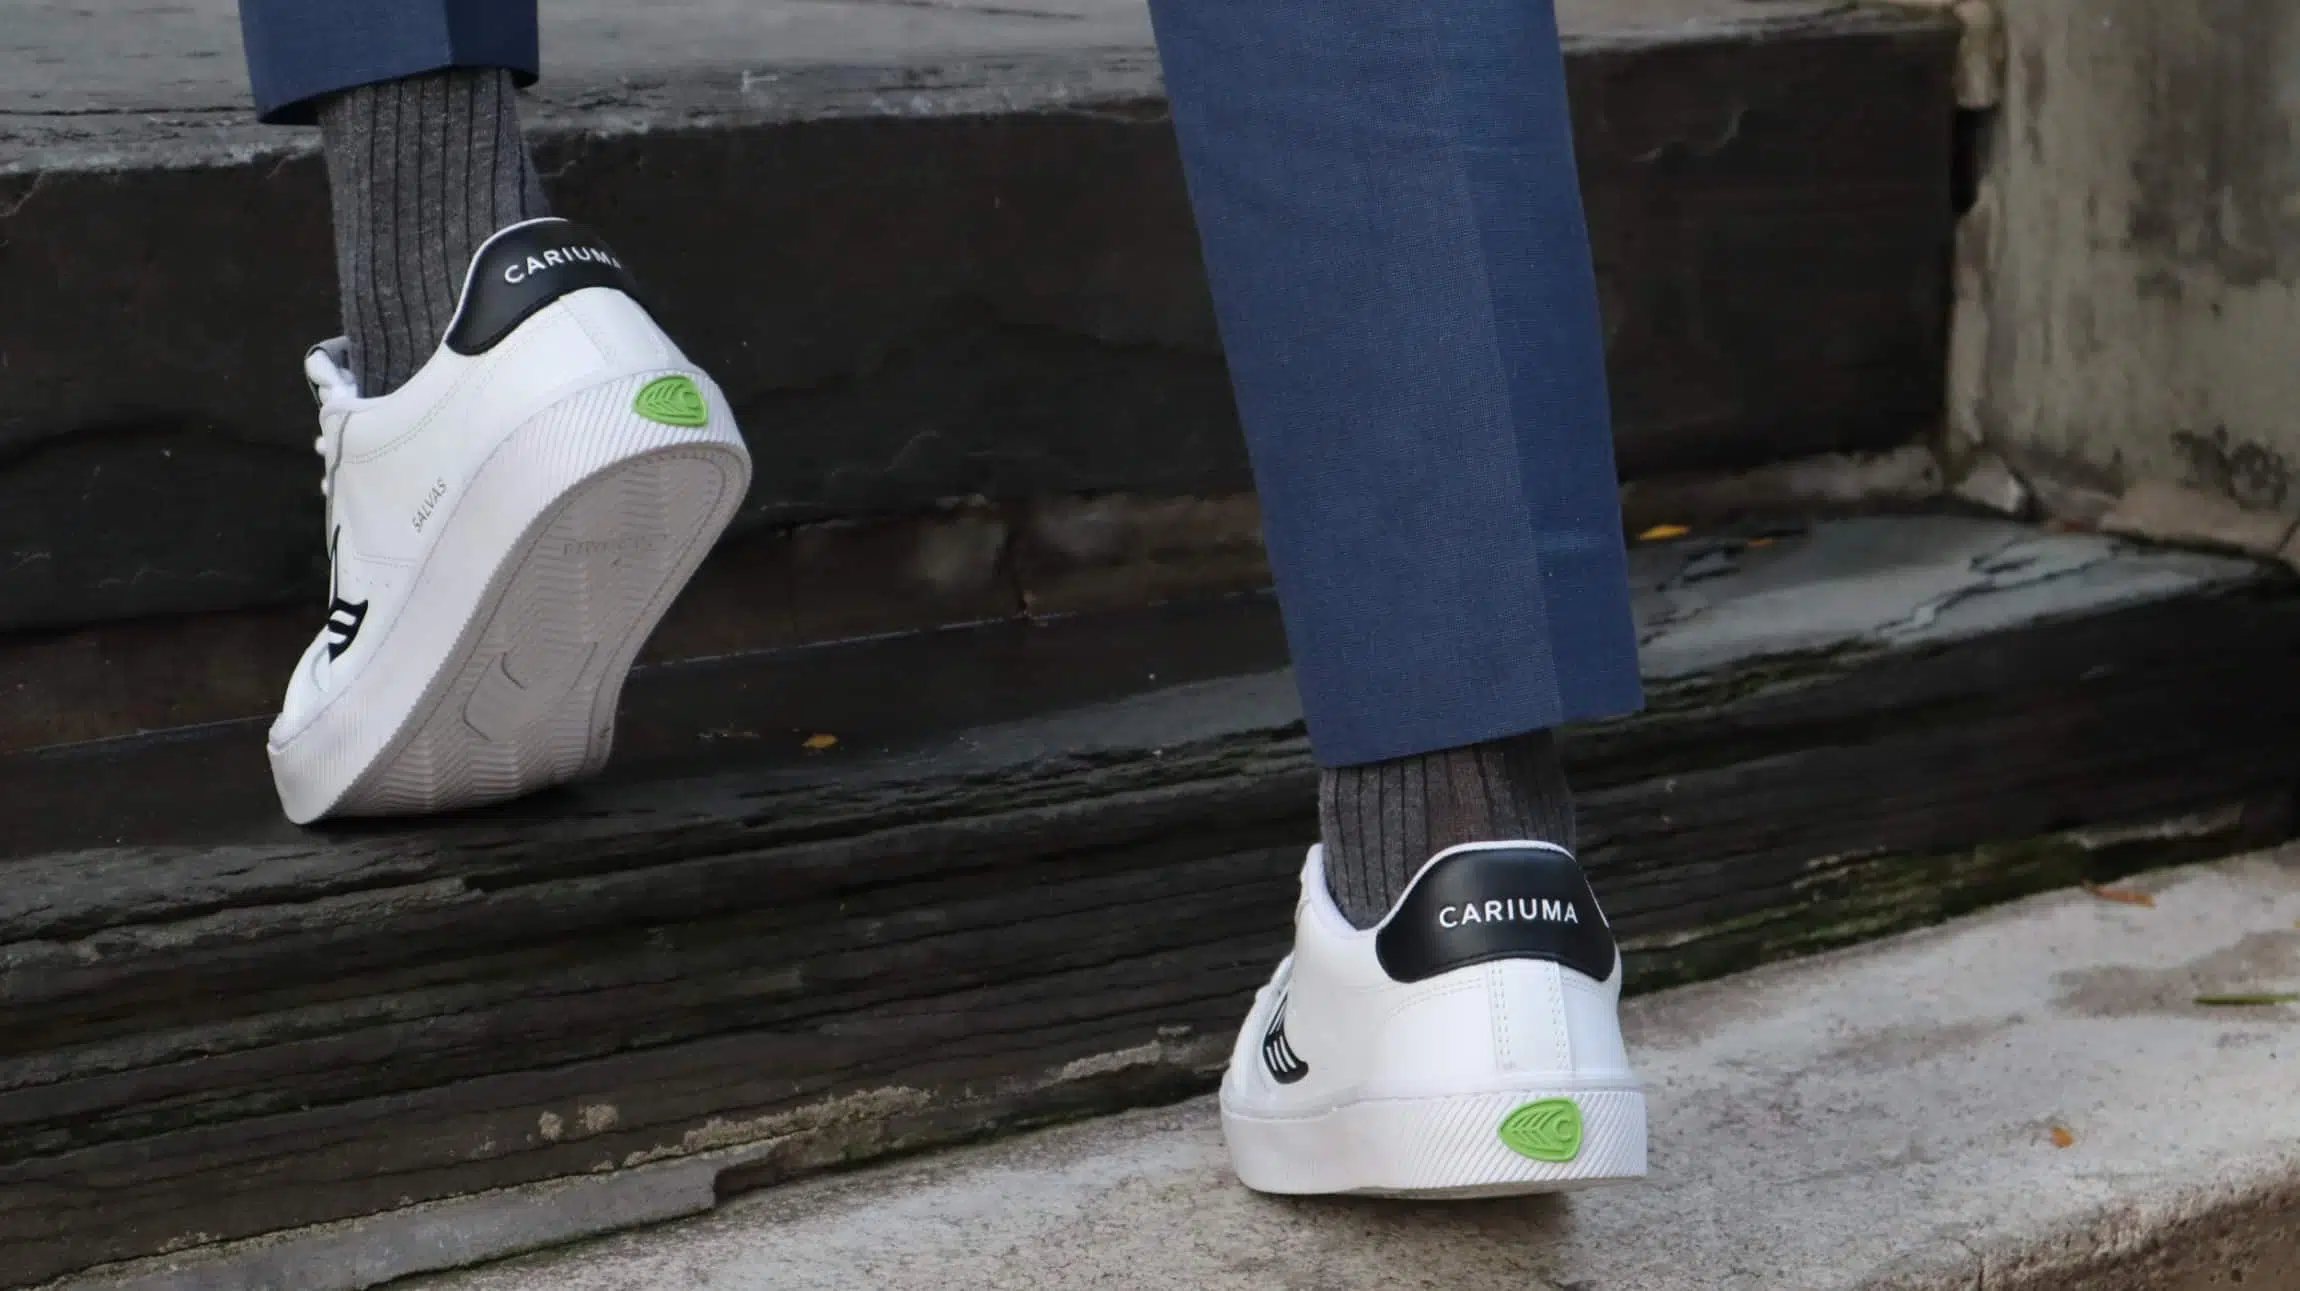 Karlton wearing Cariuma Salvas sneakers